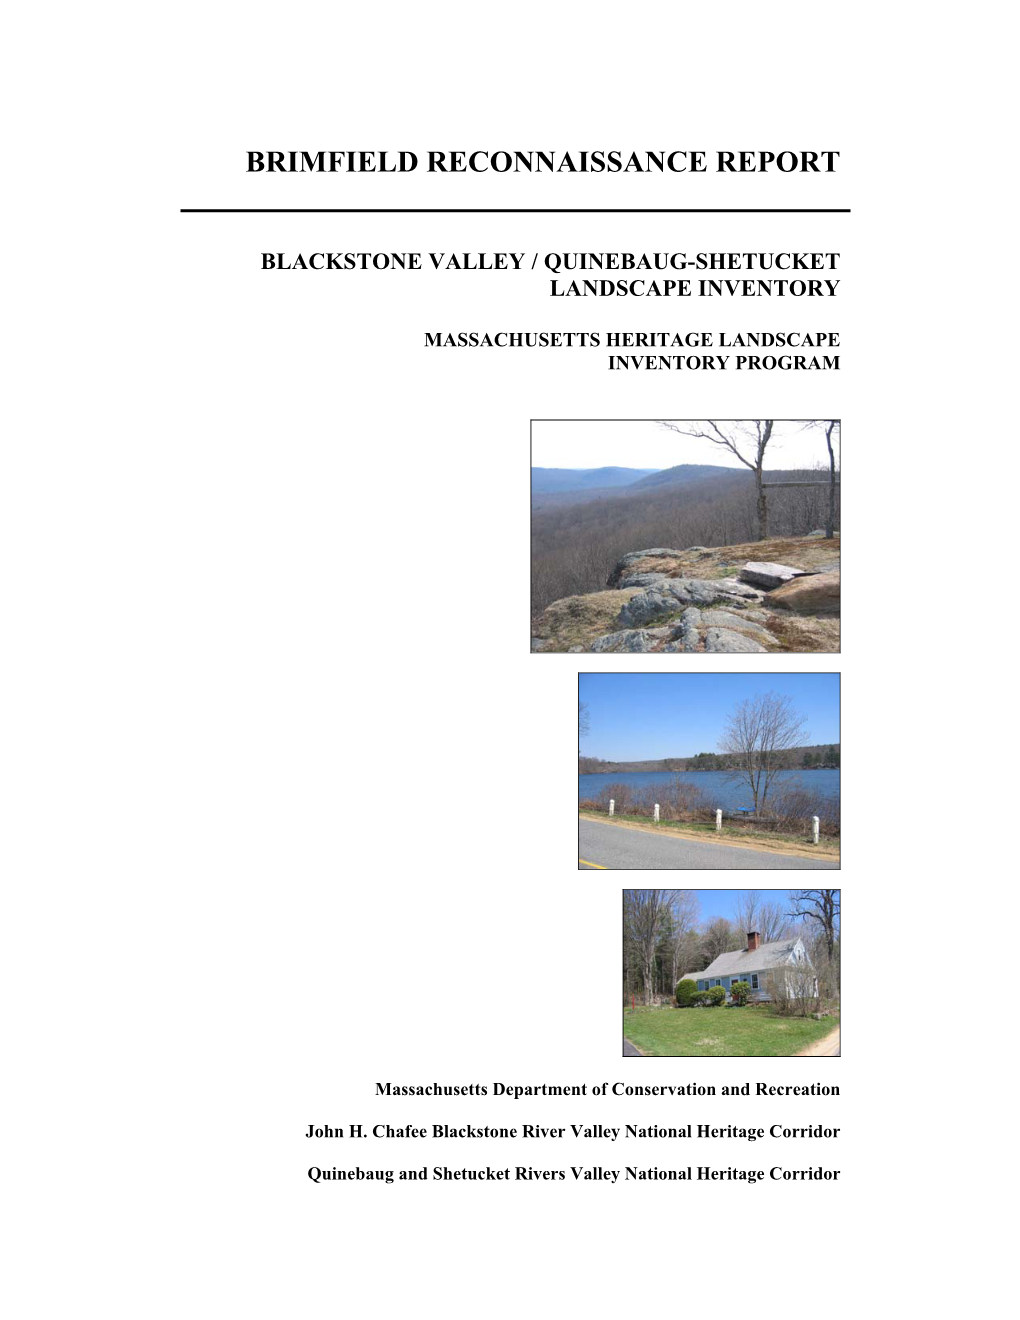 Brimfield Reconnaissance Report